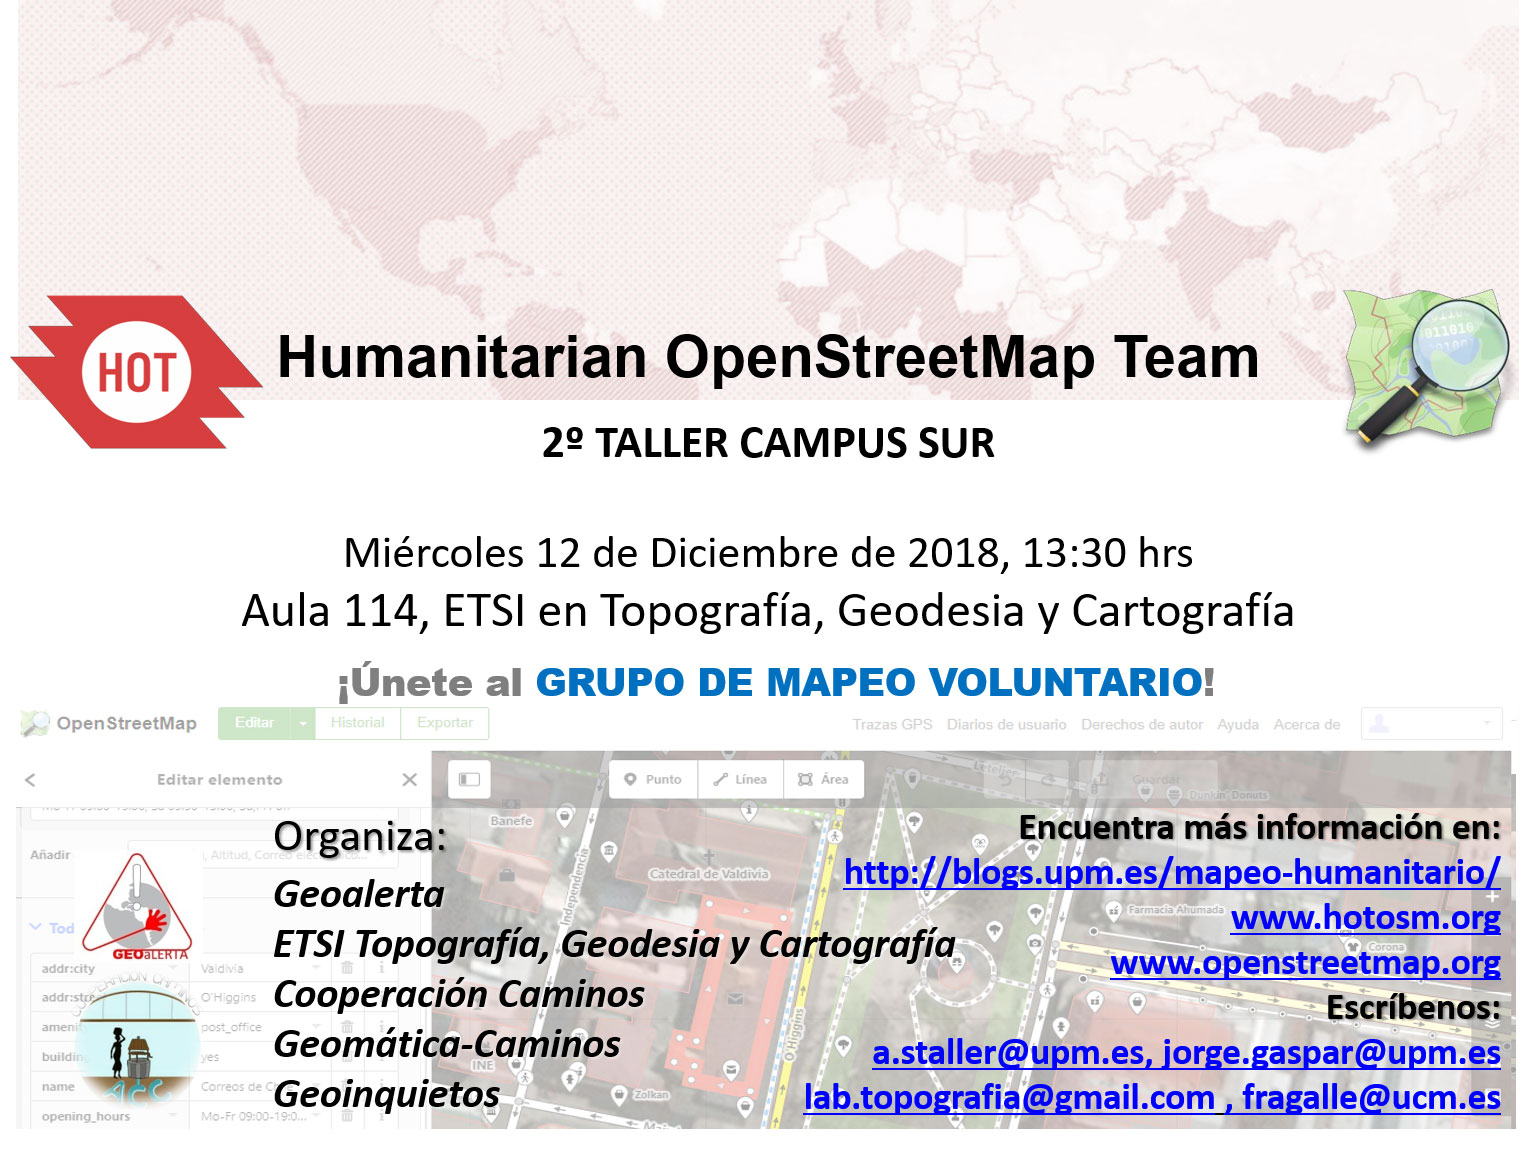 Humanitarian OpenStreetmap Team (HOT)